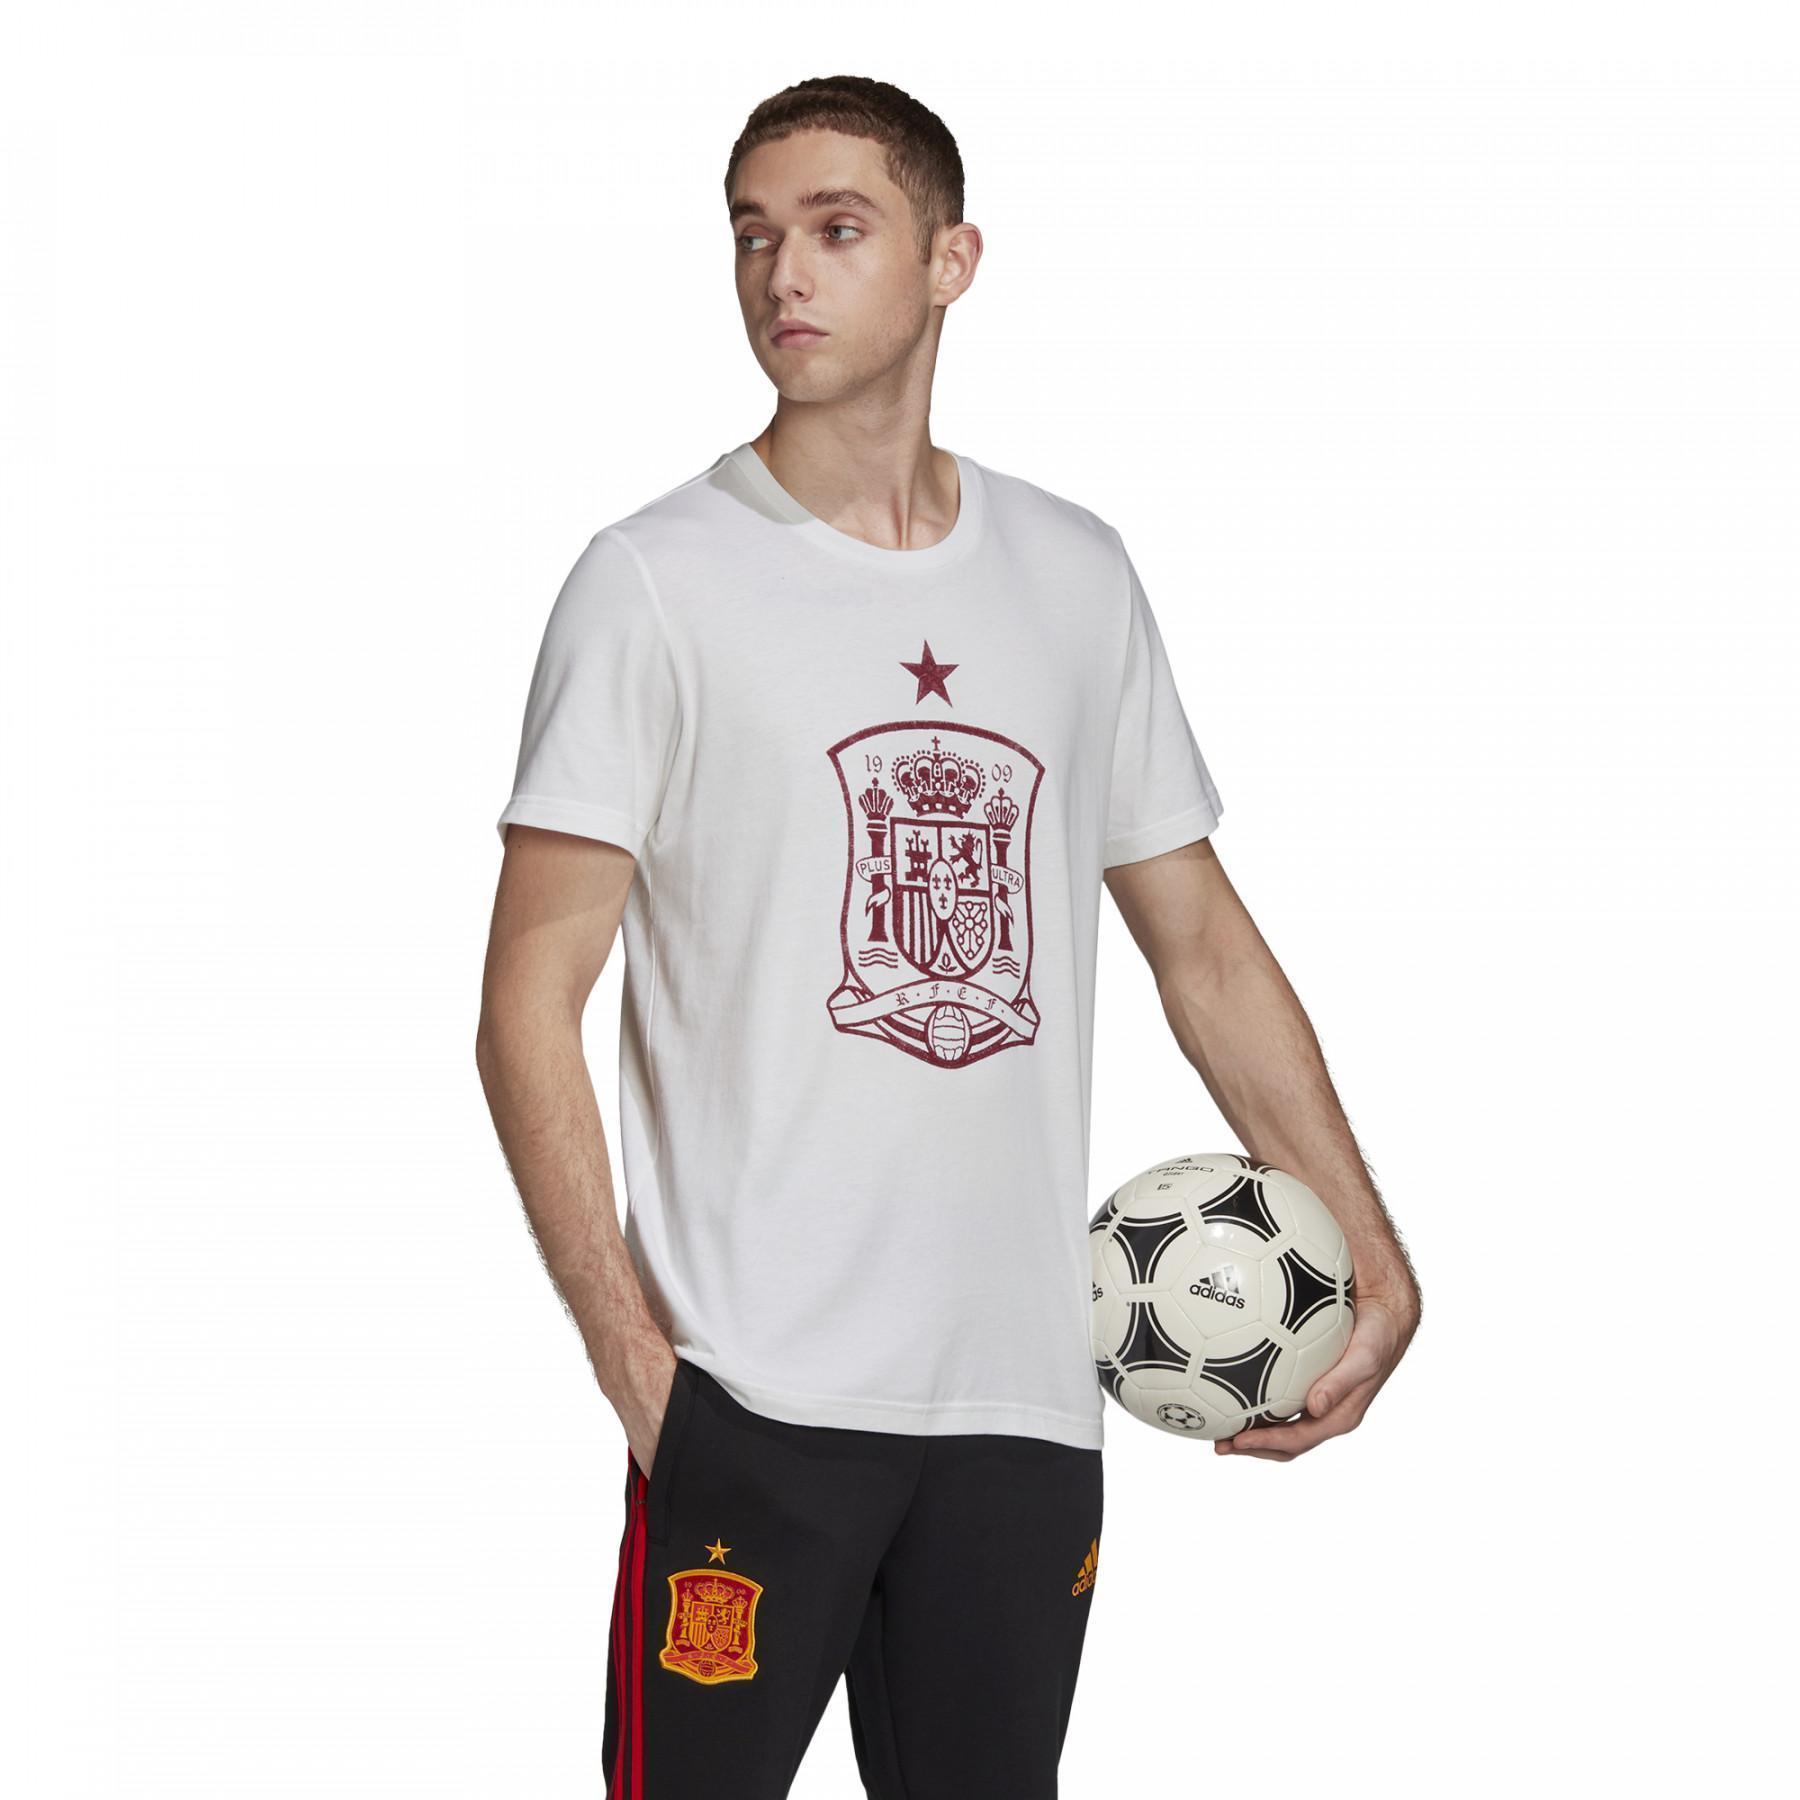 Camiseta Espagne DNA Graphics 2020